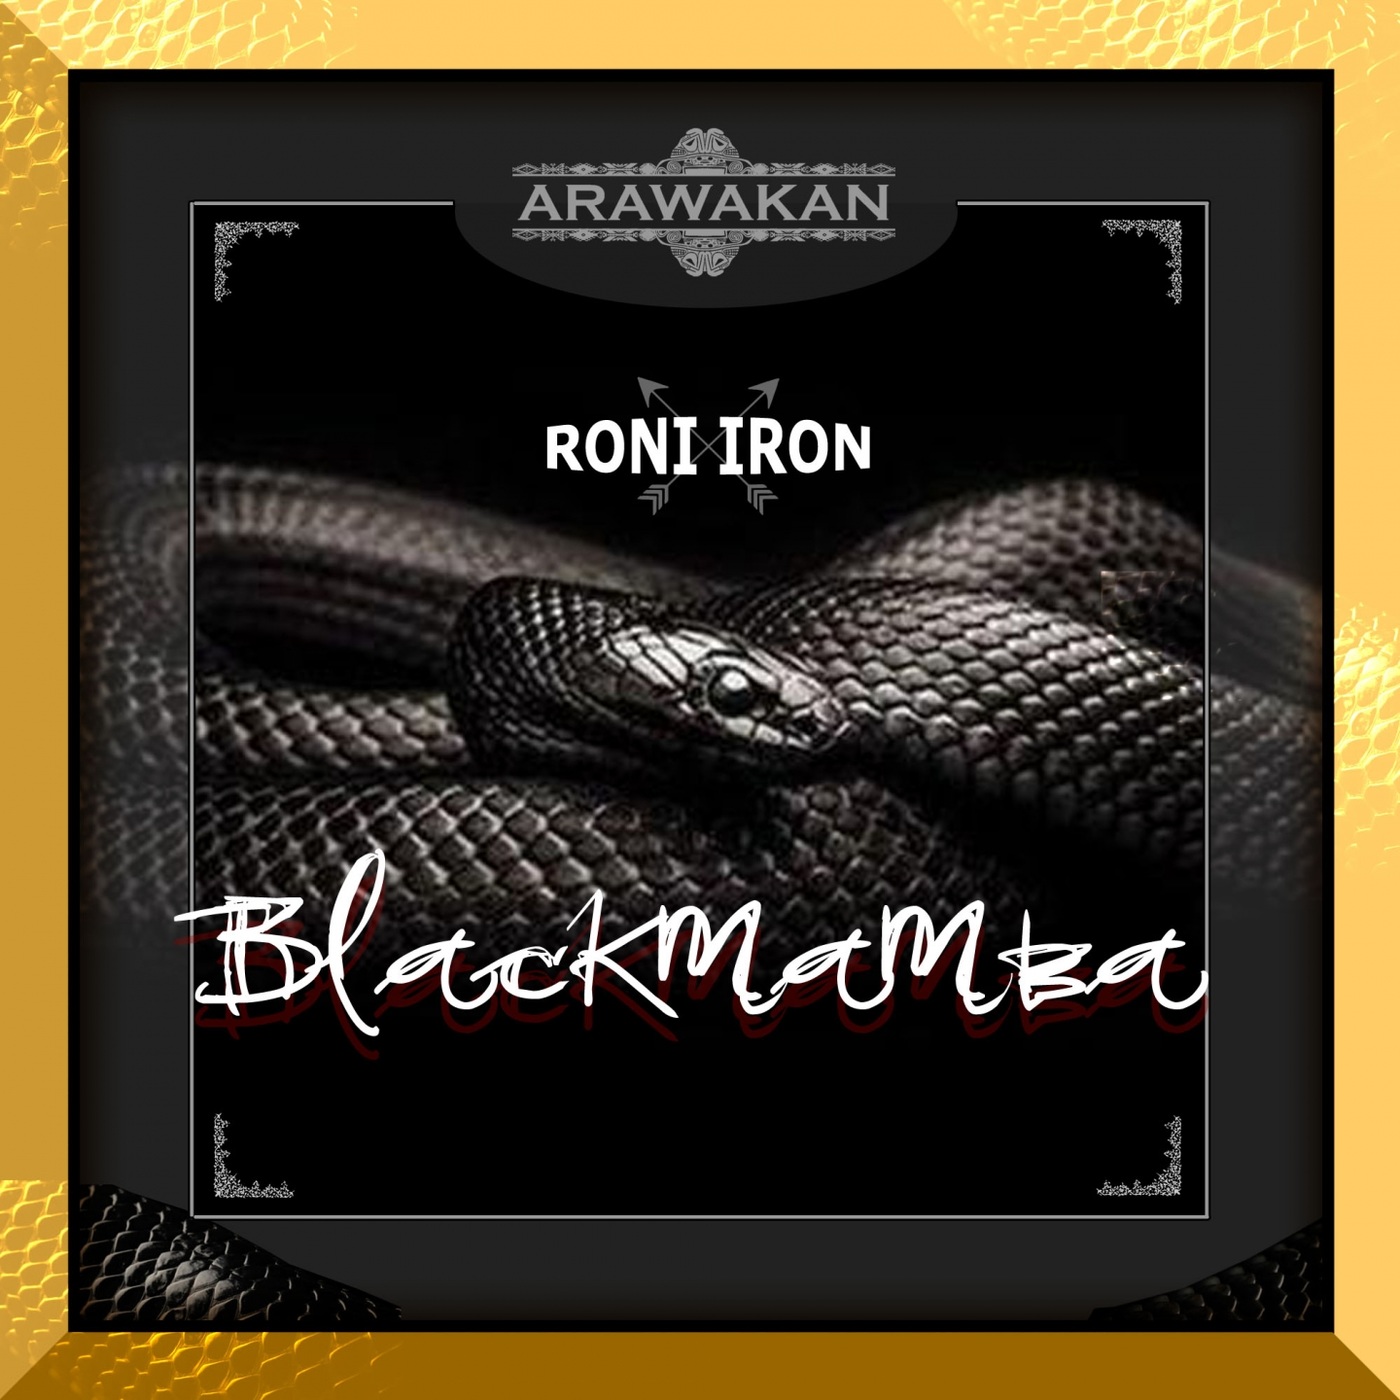 Roni Iron - Blackmamba / Arawakan Records